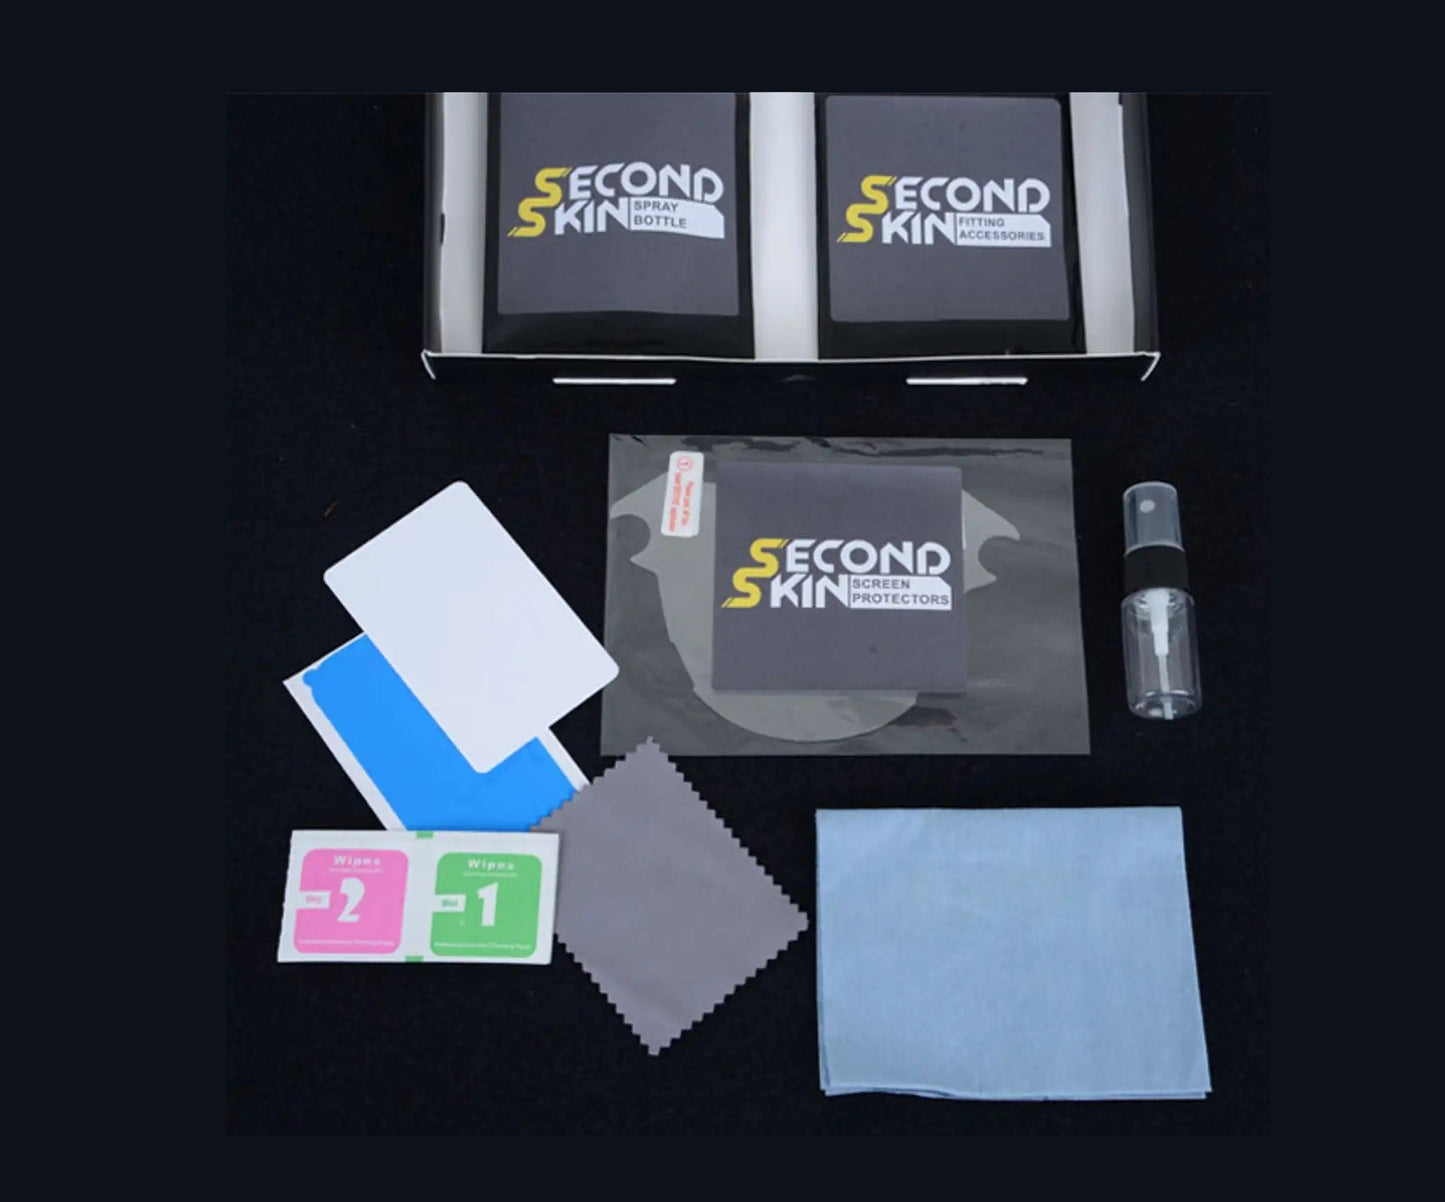 DSP-HON-002 - R&G RACING Honda NC750S / X / Integra 750 Dashboard Screen Protector Kit